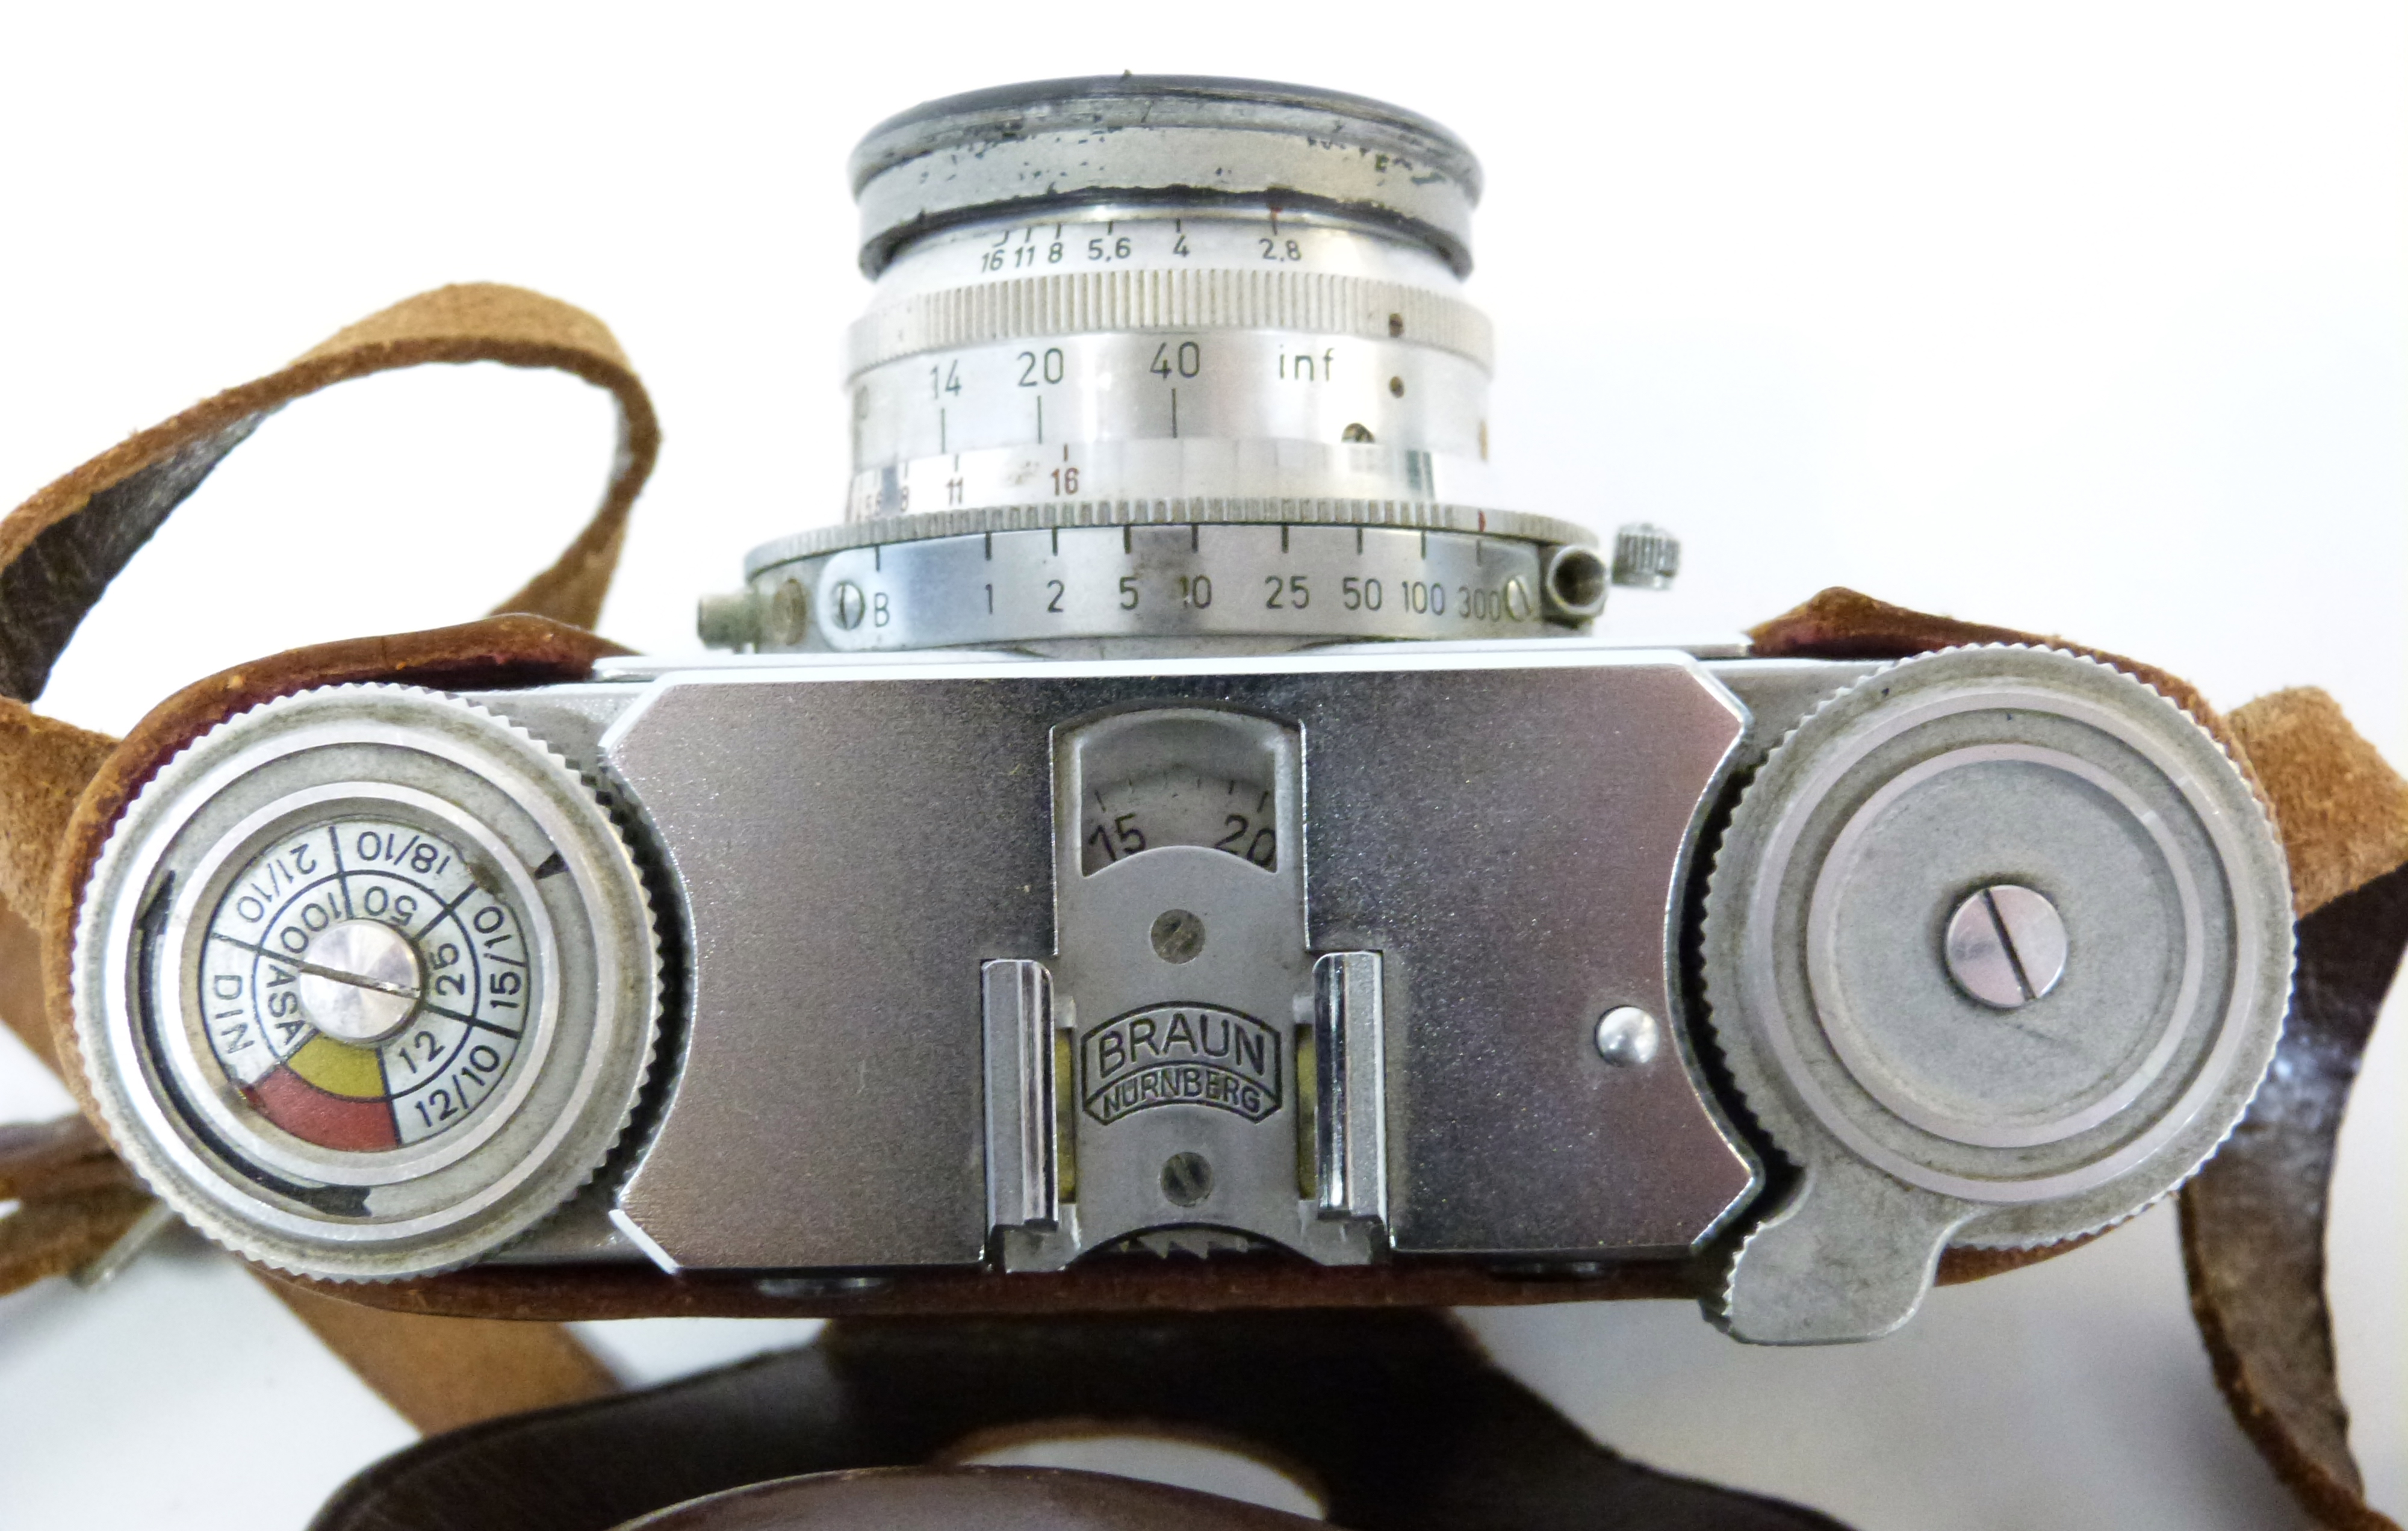 Braun Paxette camera - Image 5 of 5